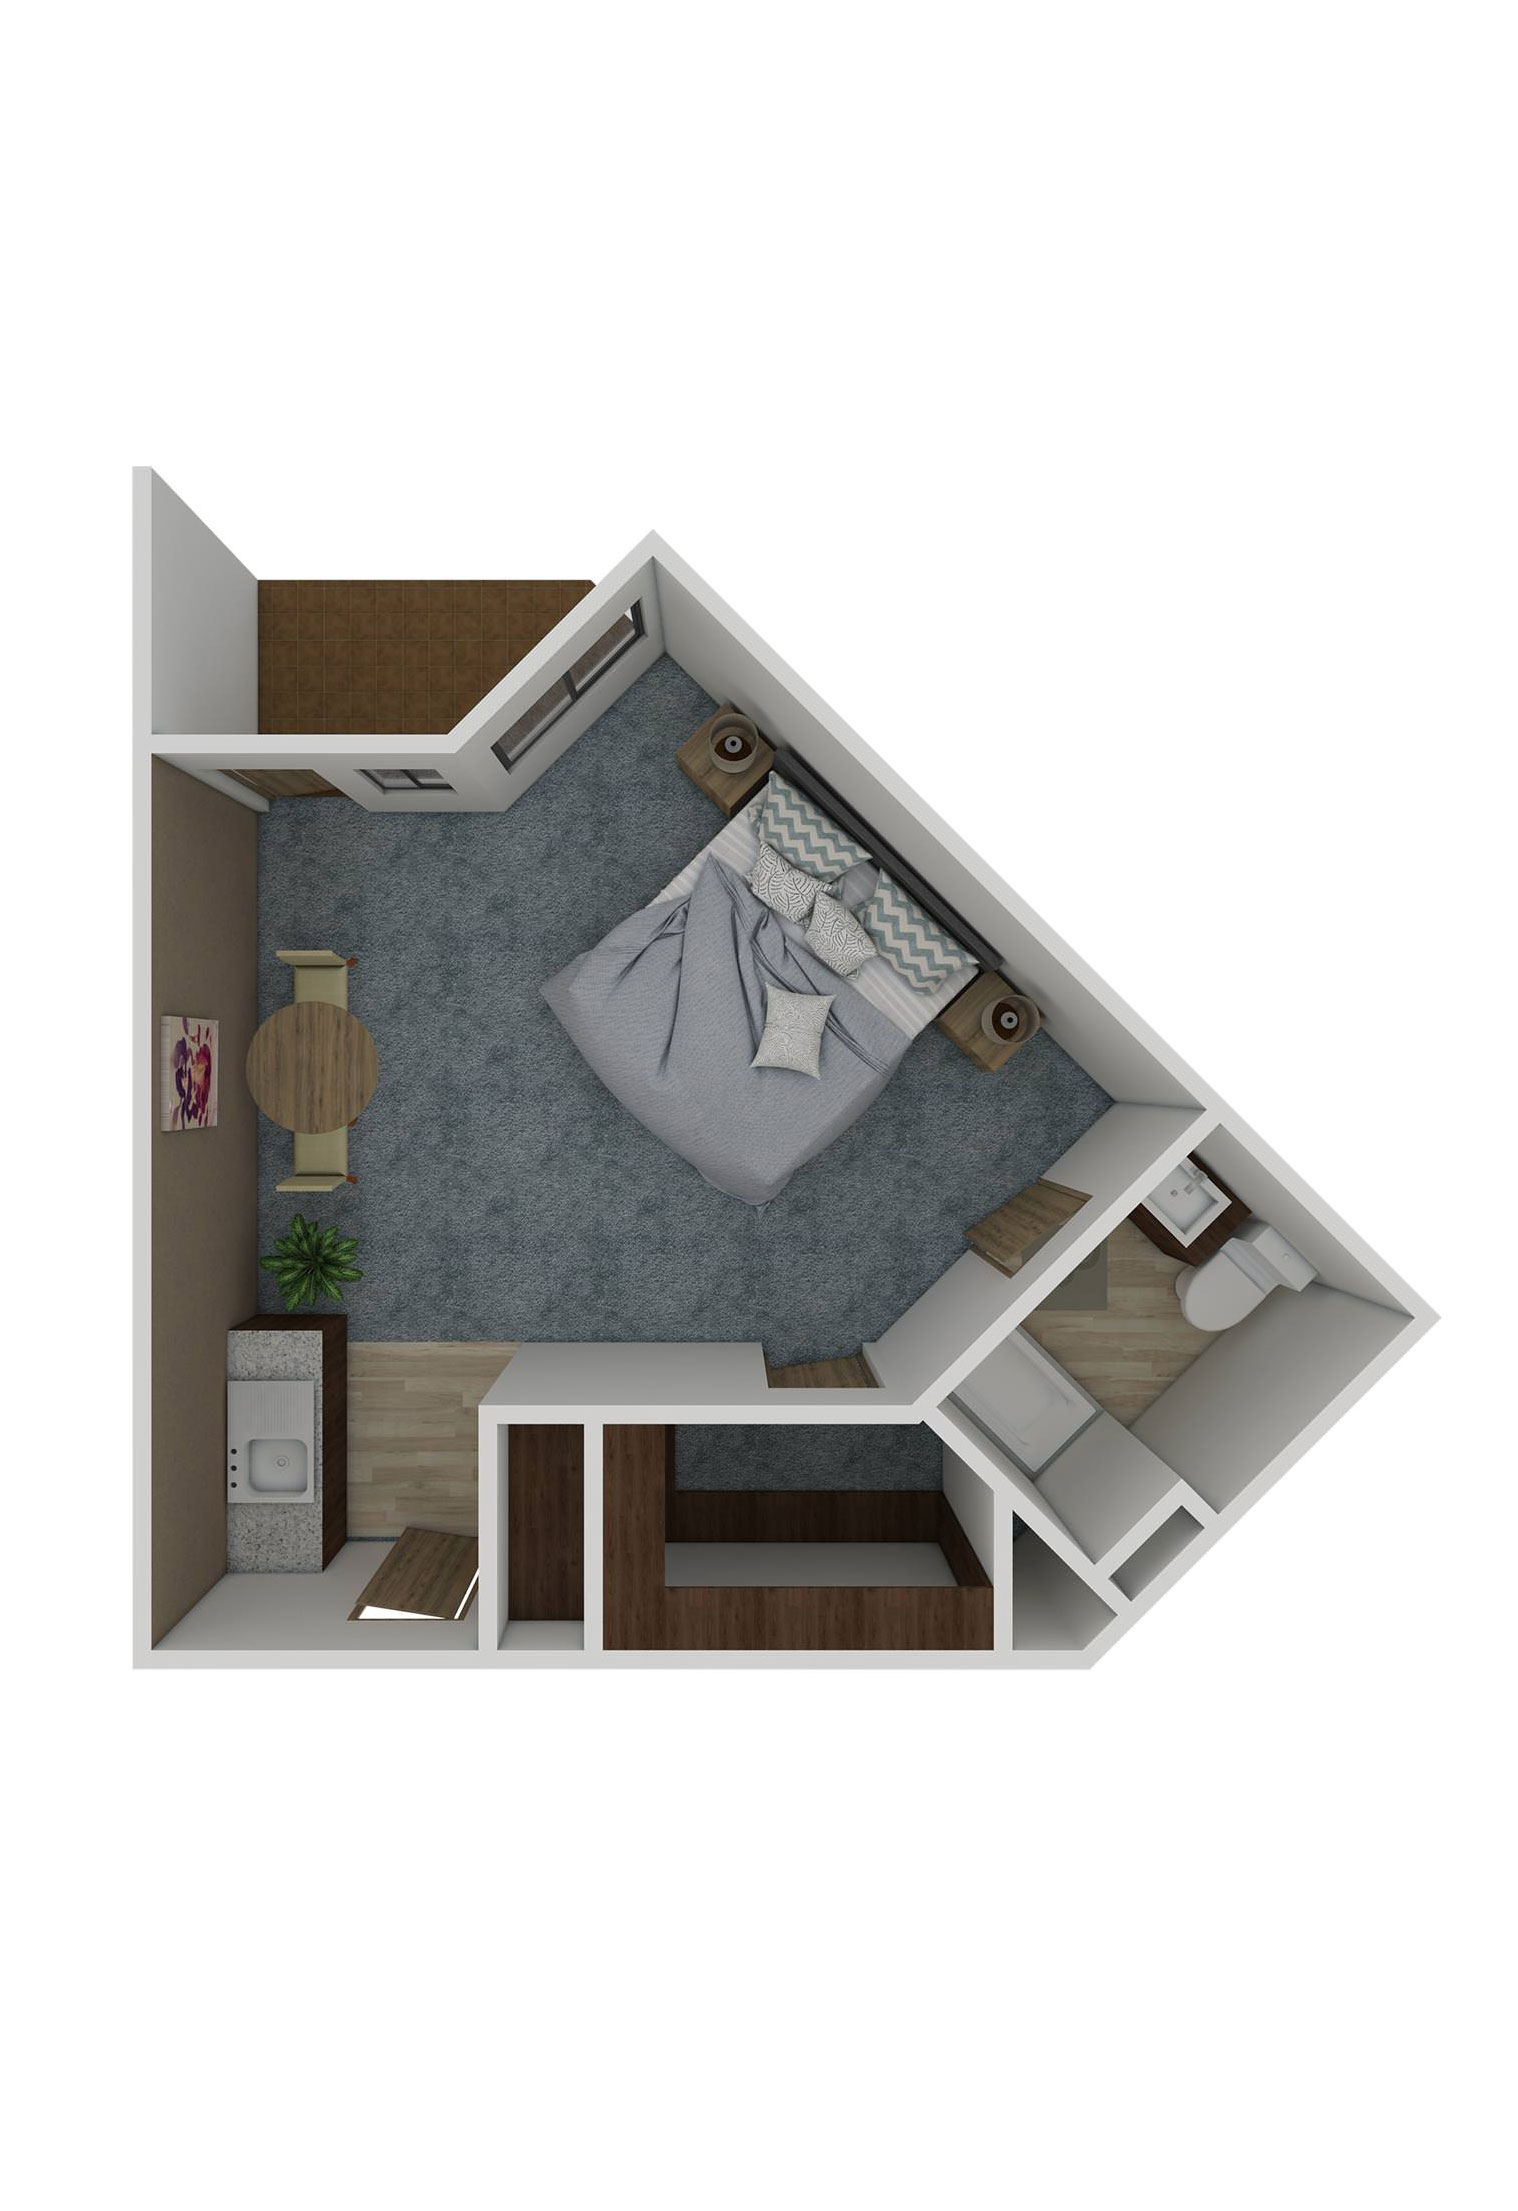 A4 floor plan